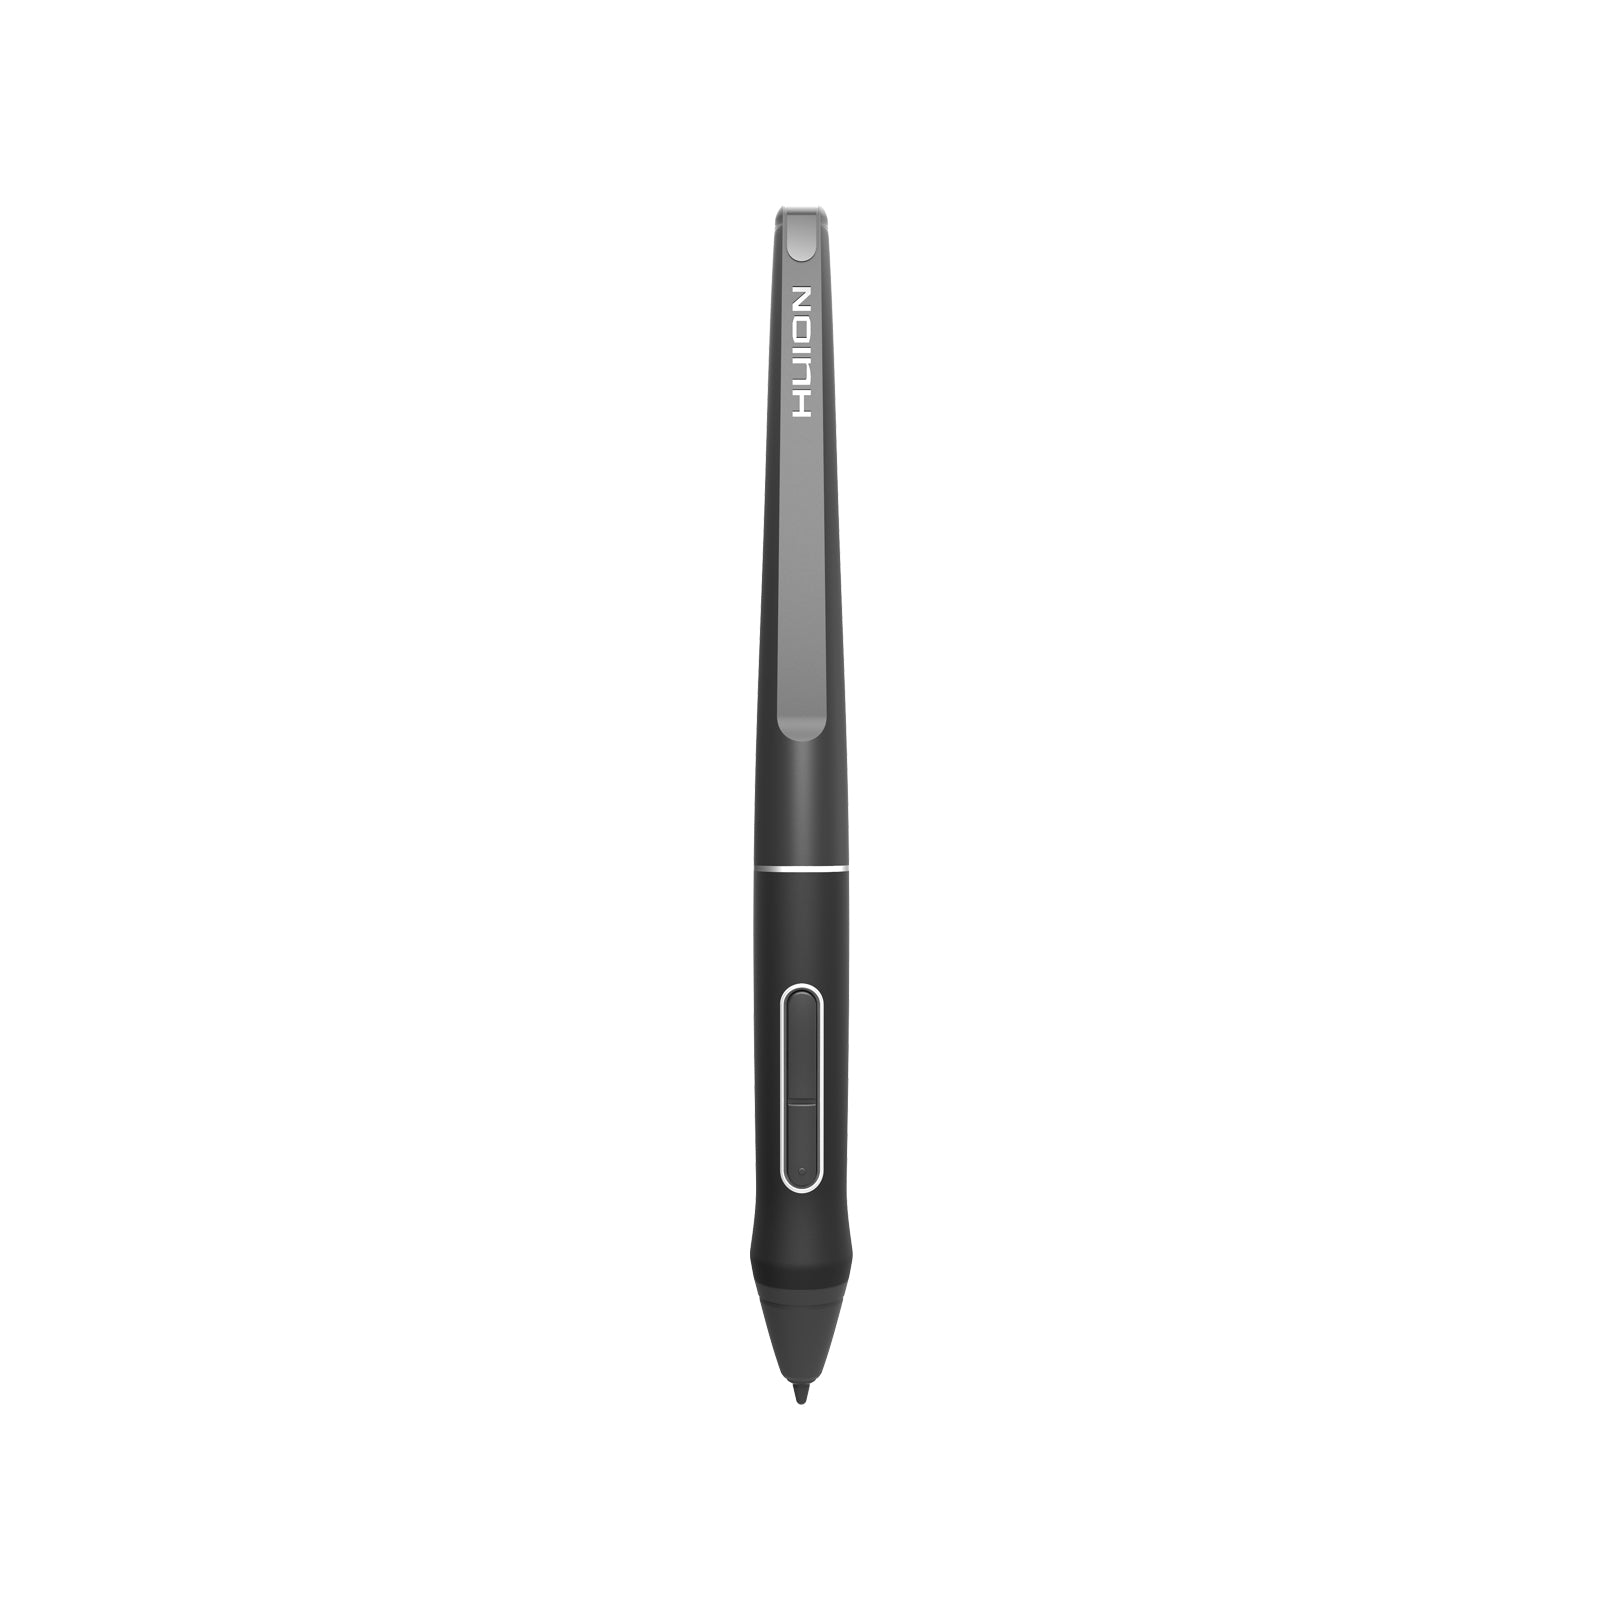 Huion PW507 Battery-Free Pen